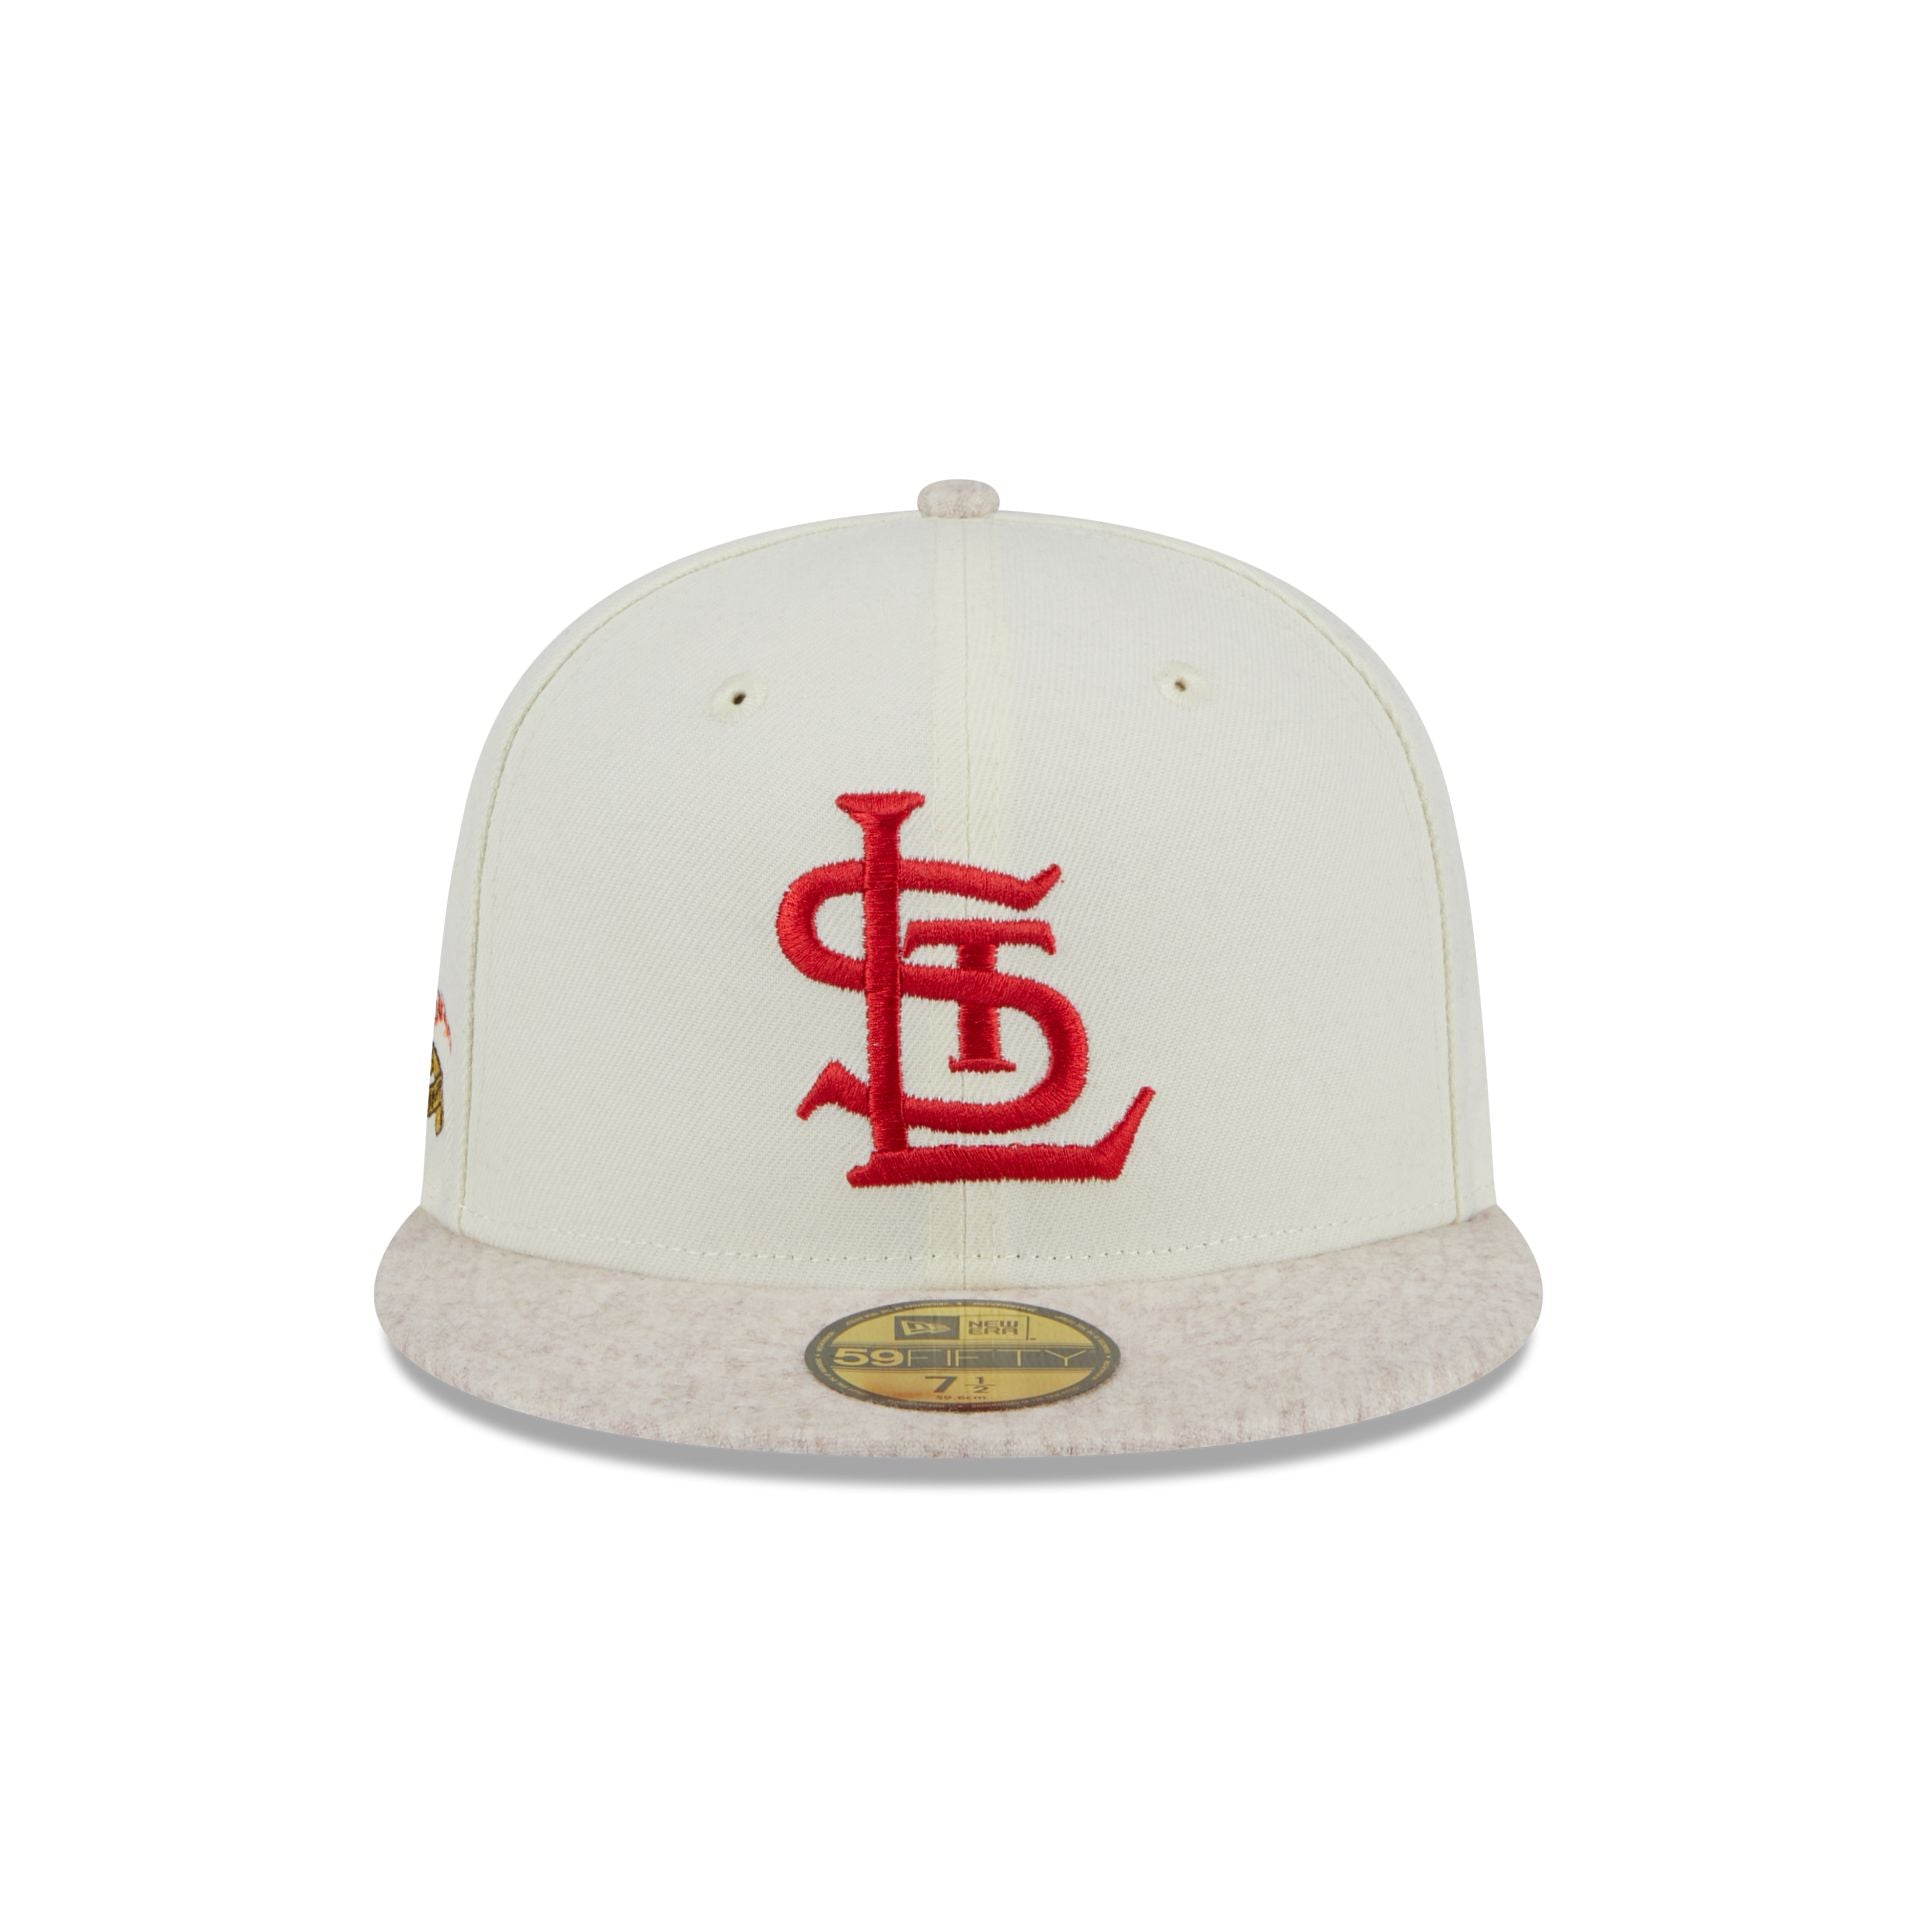 St. Louis Cardinals - 59FIFTY Black on Black Hat, New Era | 7 1/2